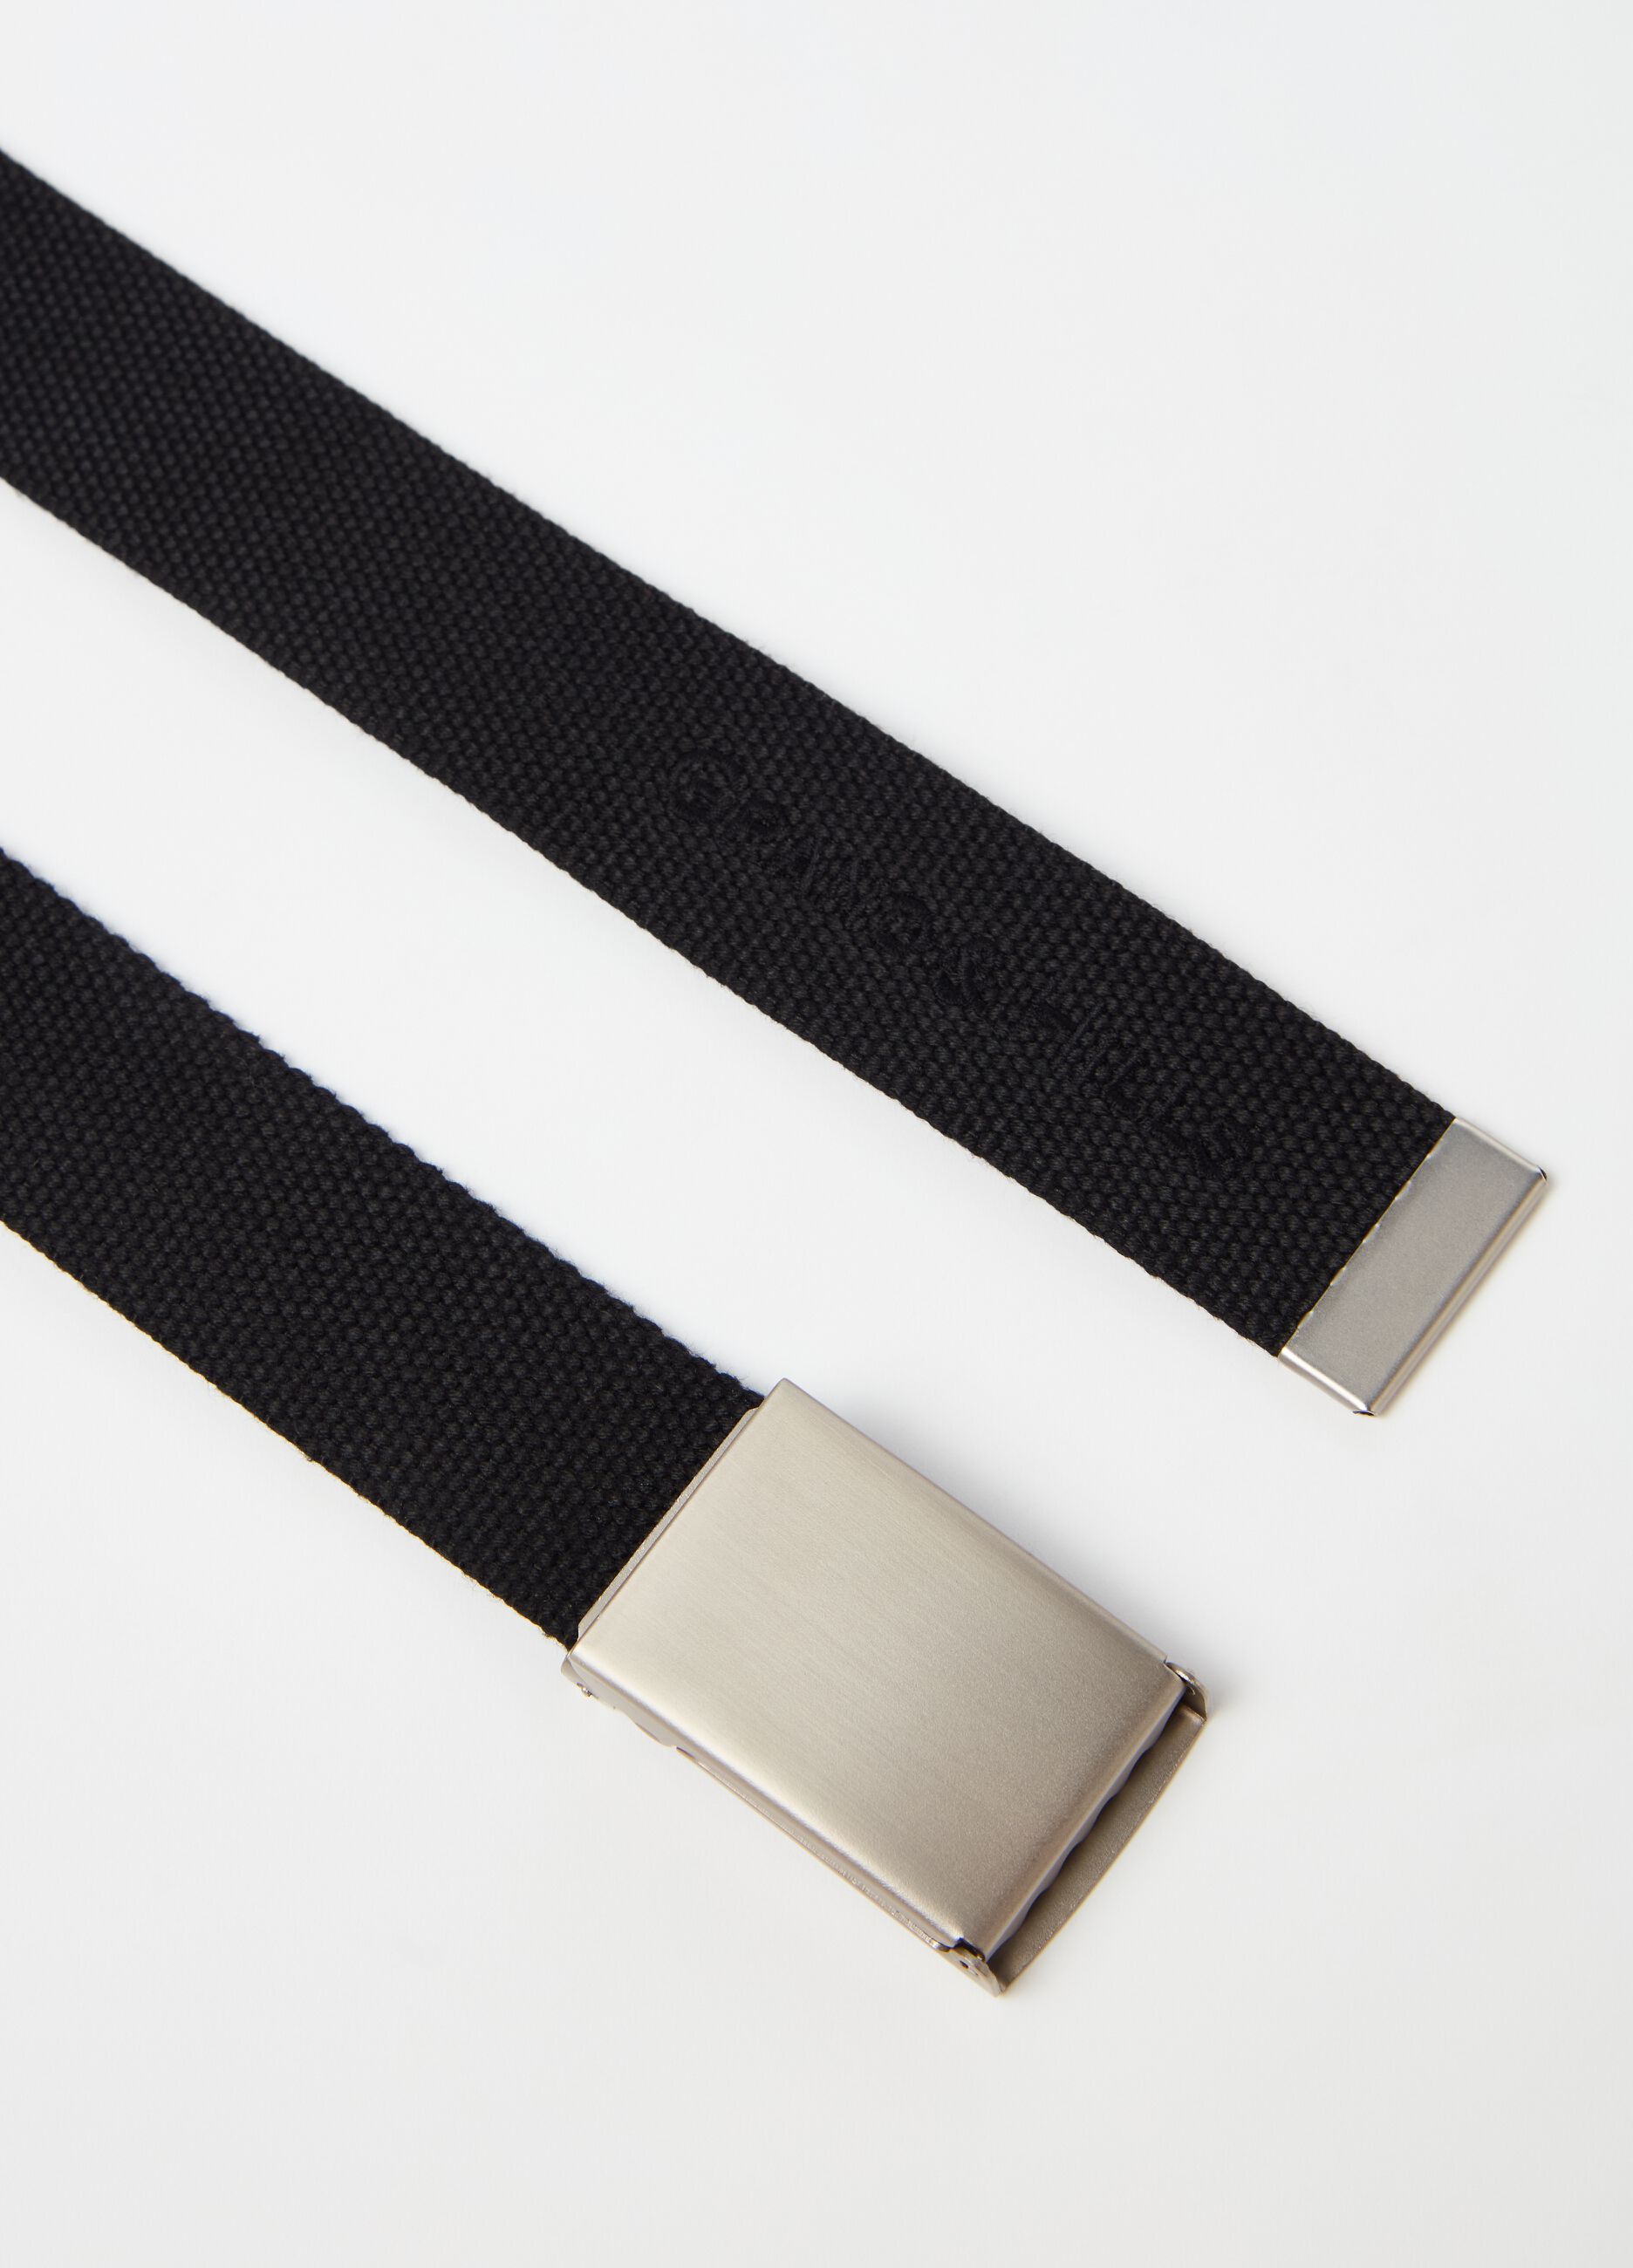 Canvas belt with sliding roller buckle